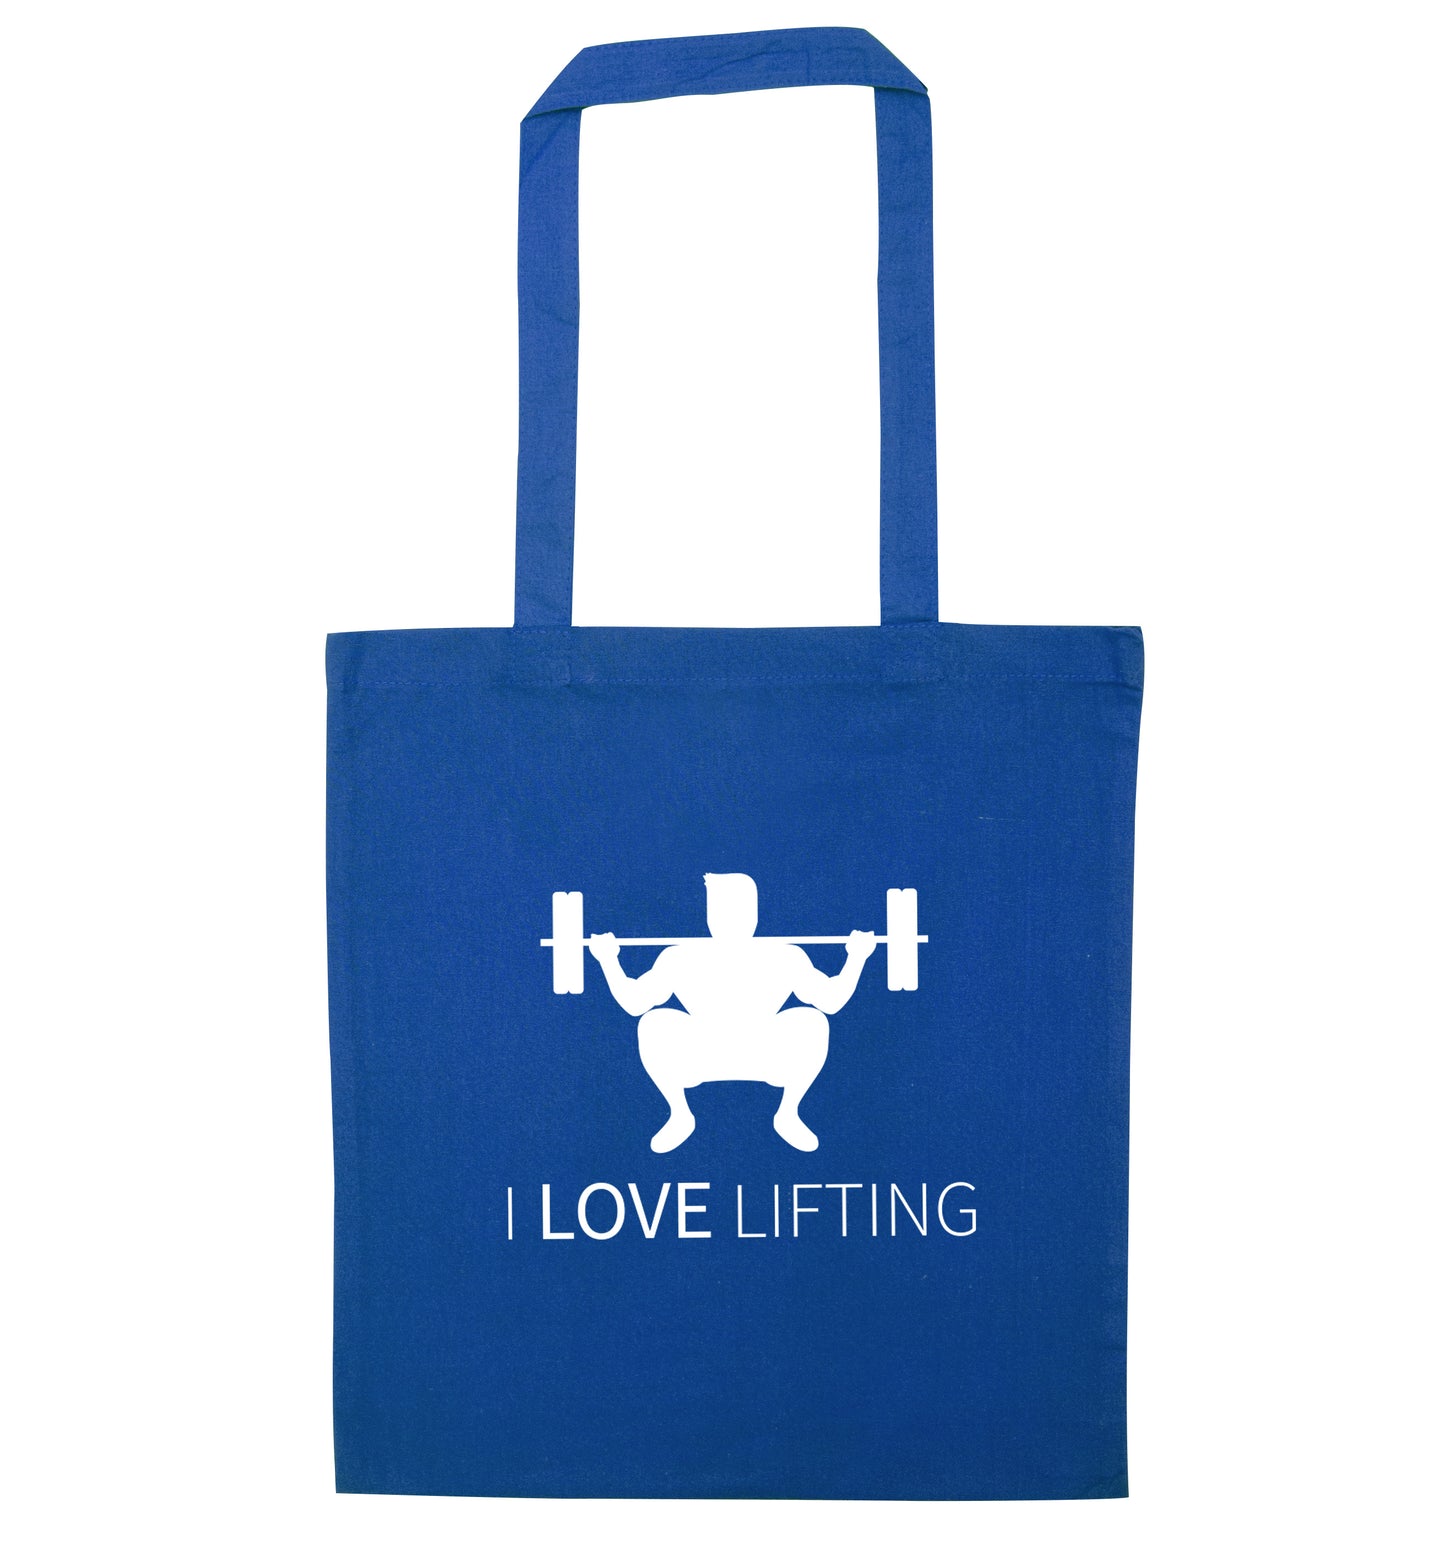 I Love Lifting blue tote bag